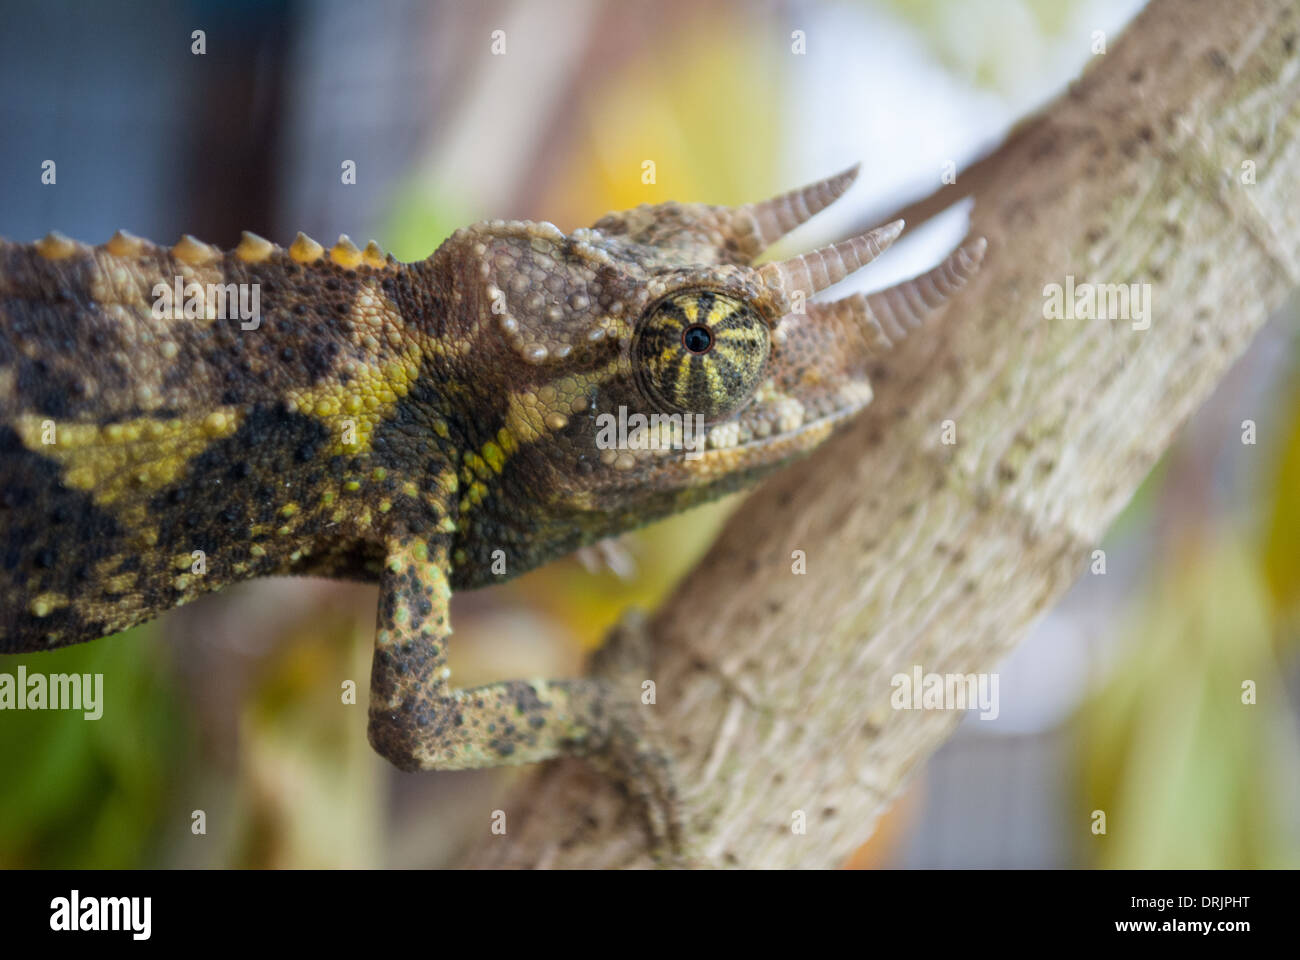 Jackson Chameleon climbing a branch, staring straight at camera. Stock Photo